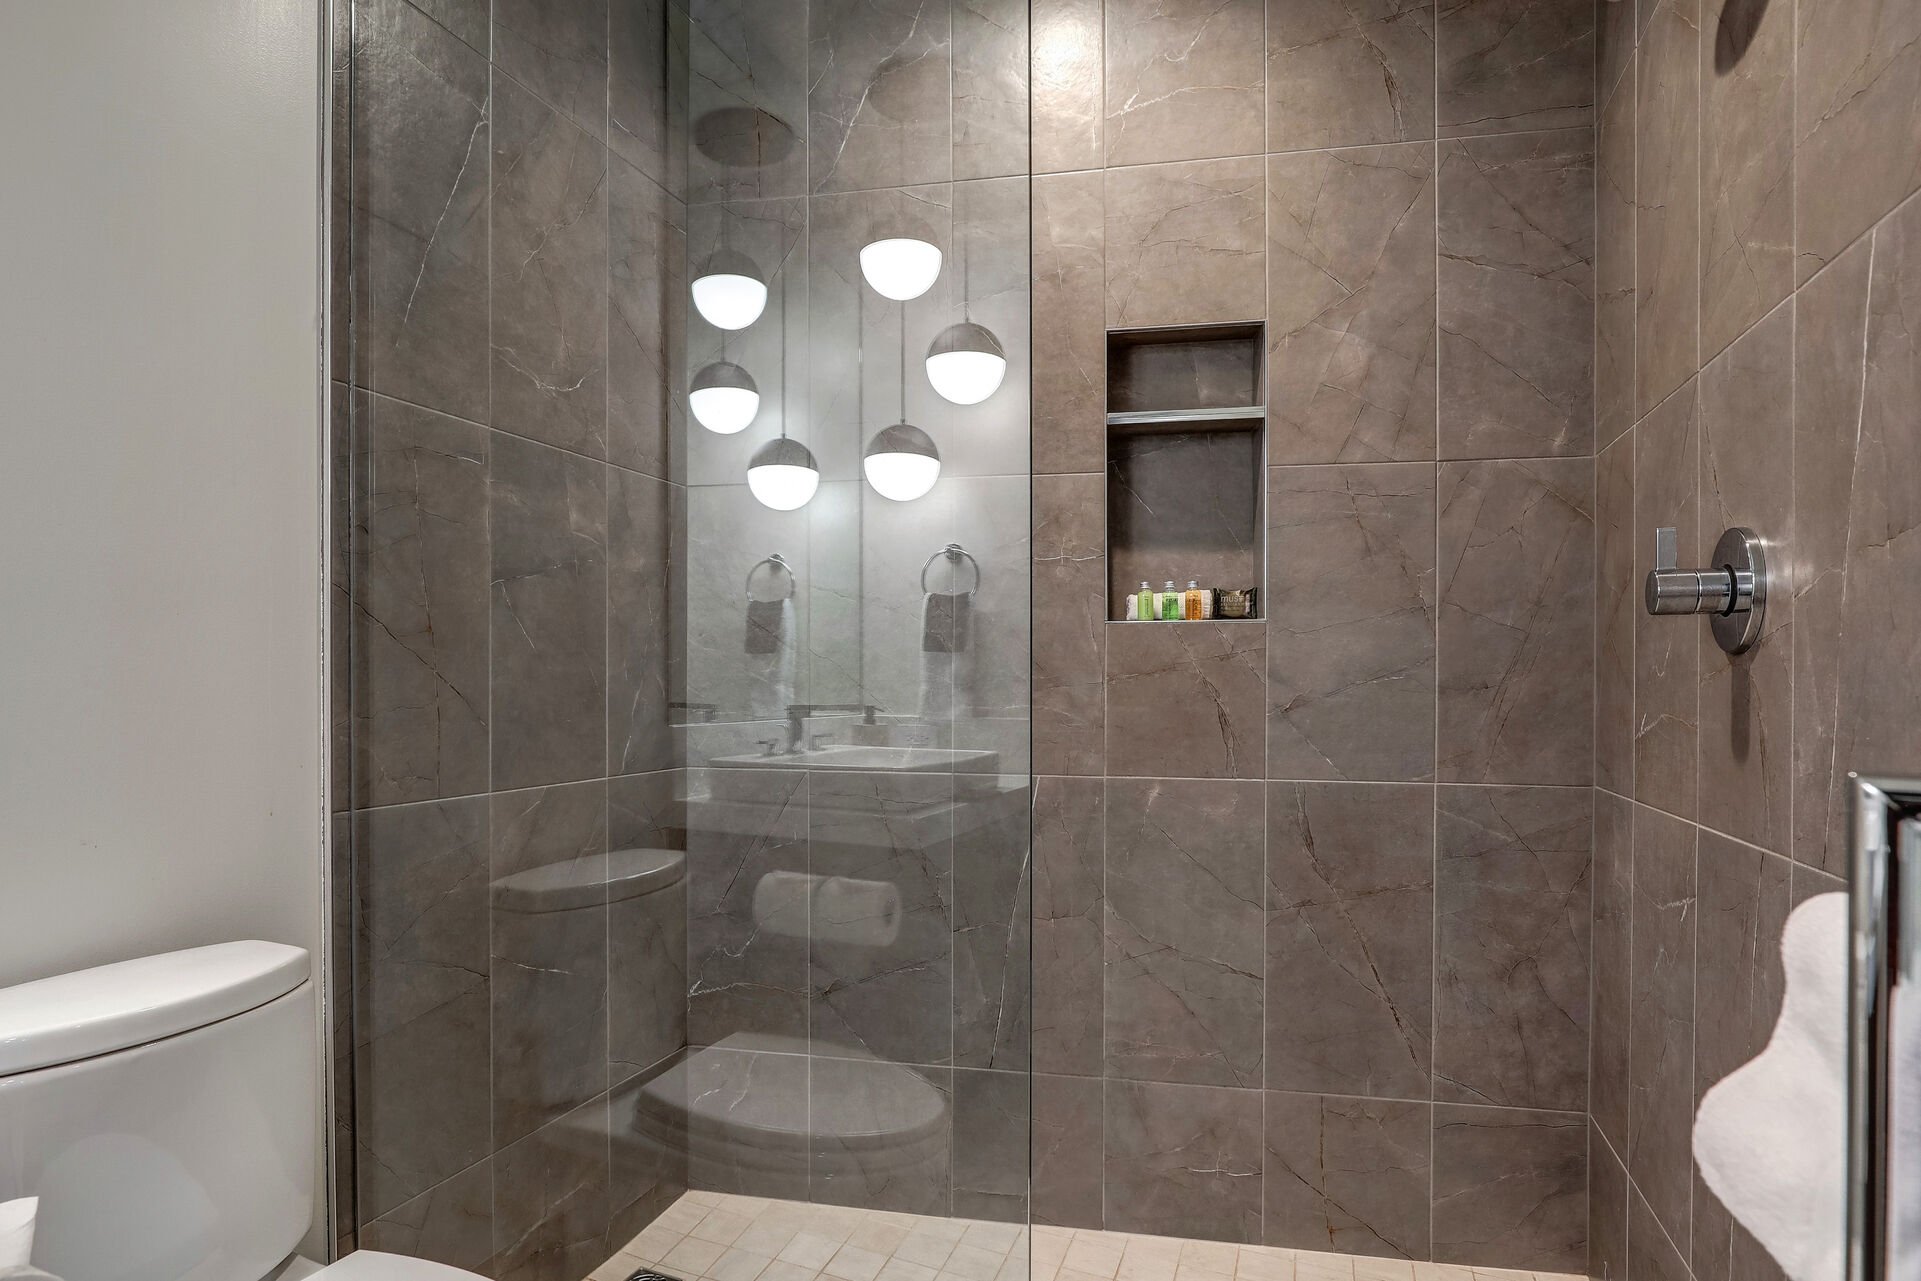 Bedroom 1 Bathroom with tiled shower